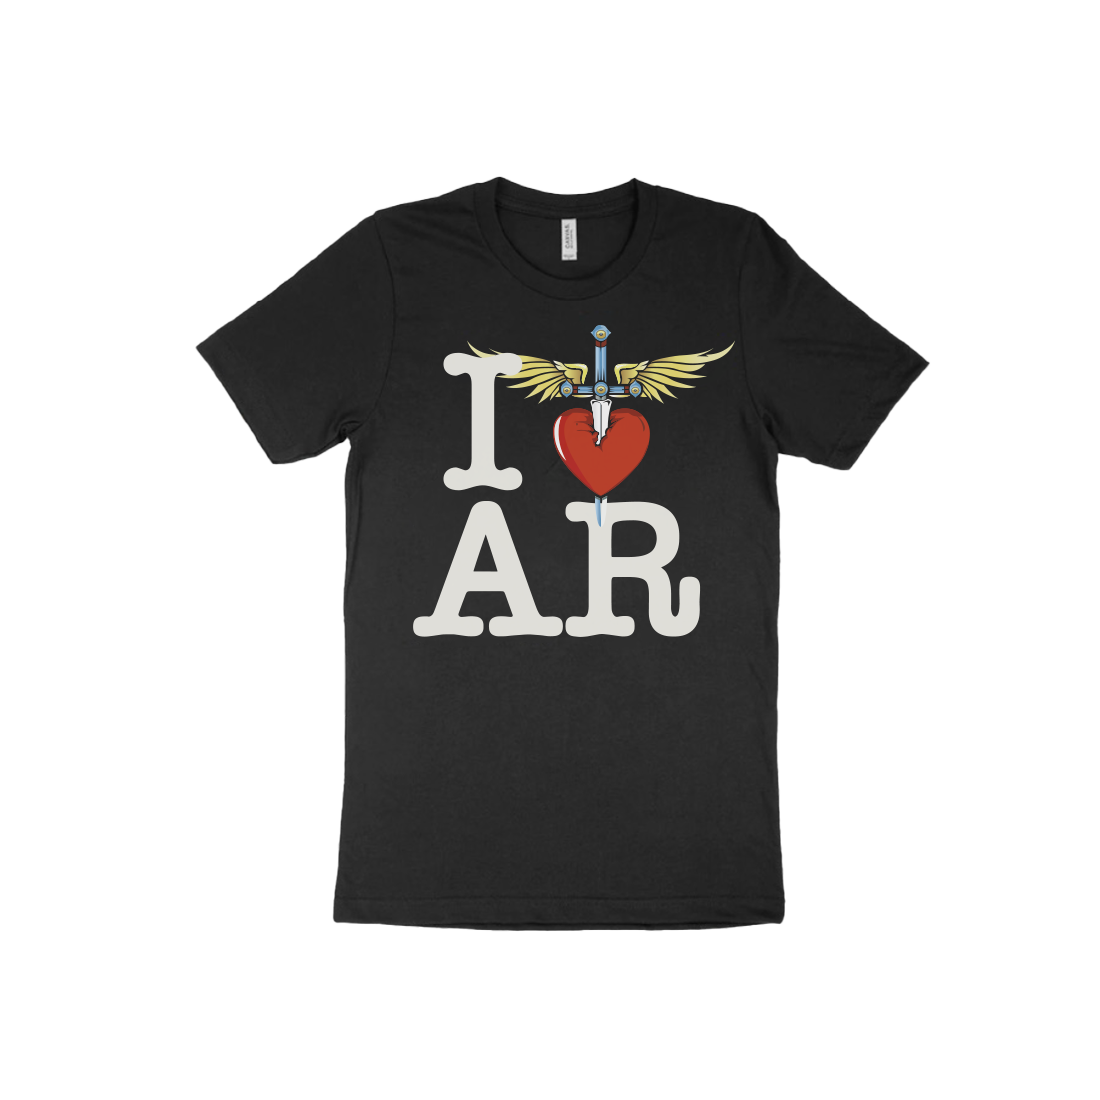 I Heart Black T-Shirt - AR 